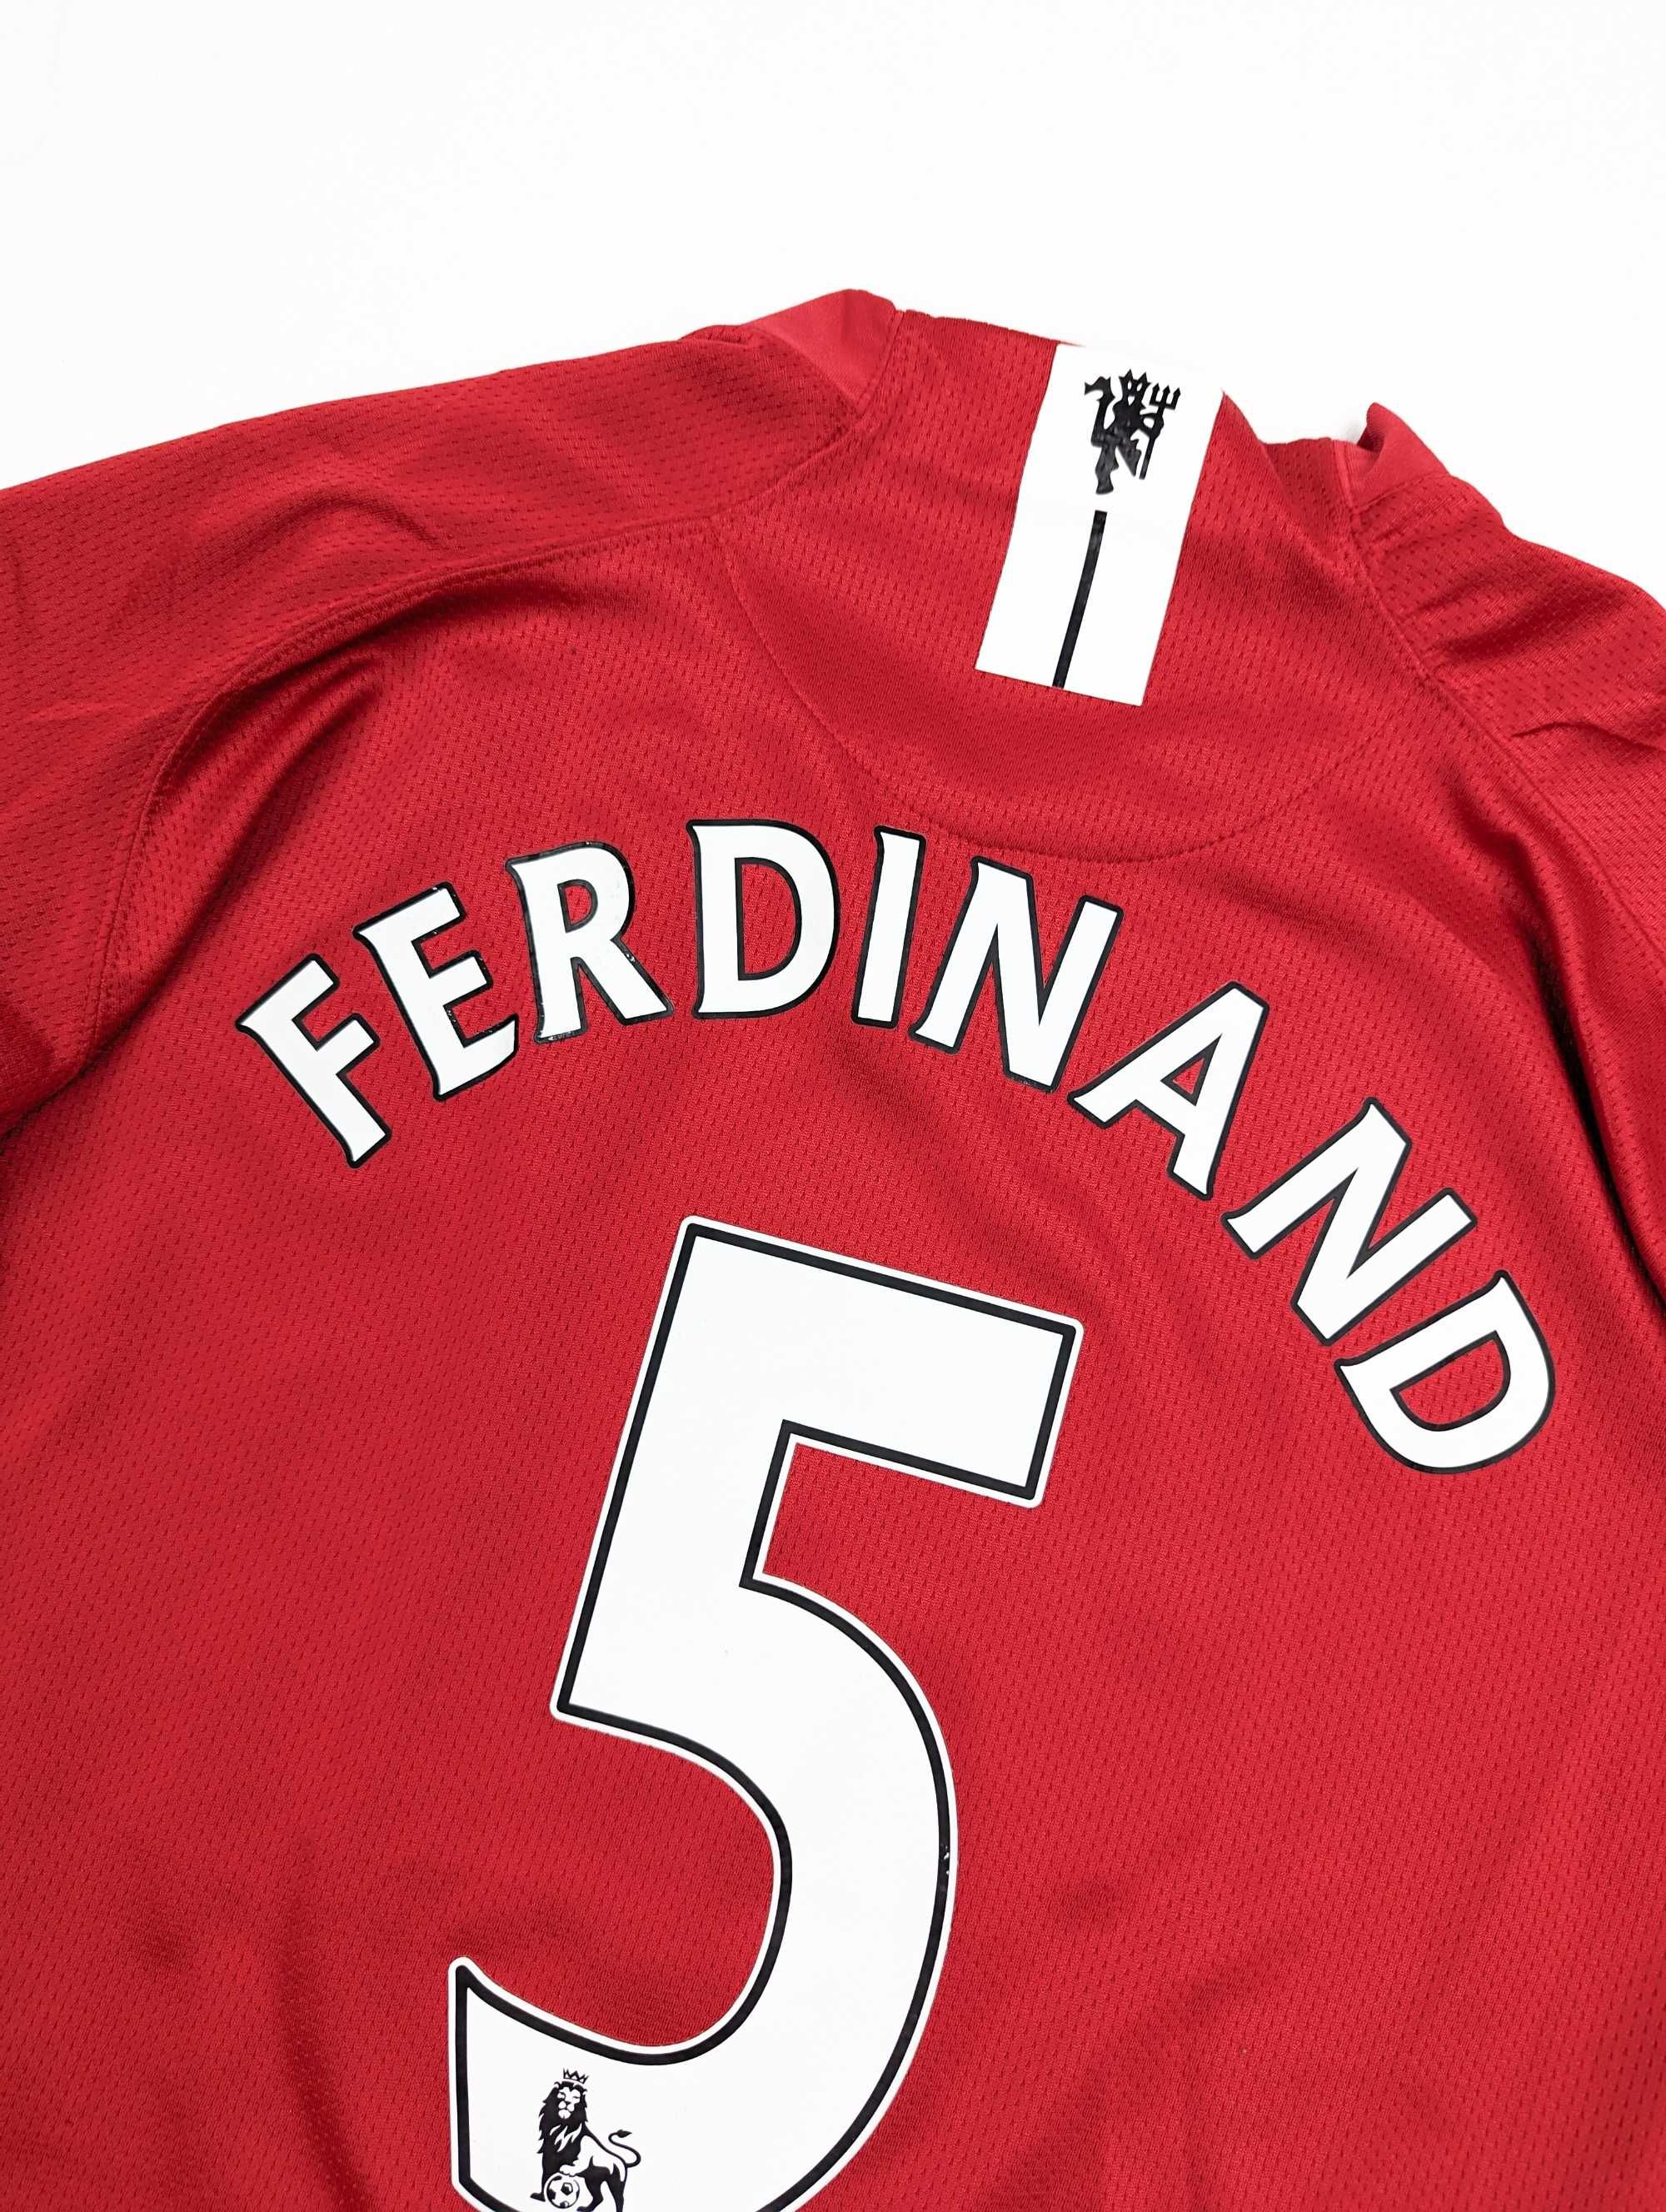 Nike Manchester United Ferdinand koszulka piłkarska XL